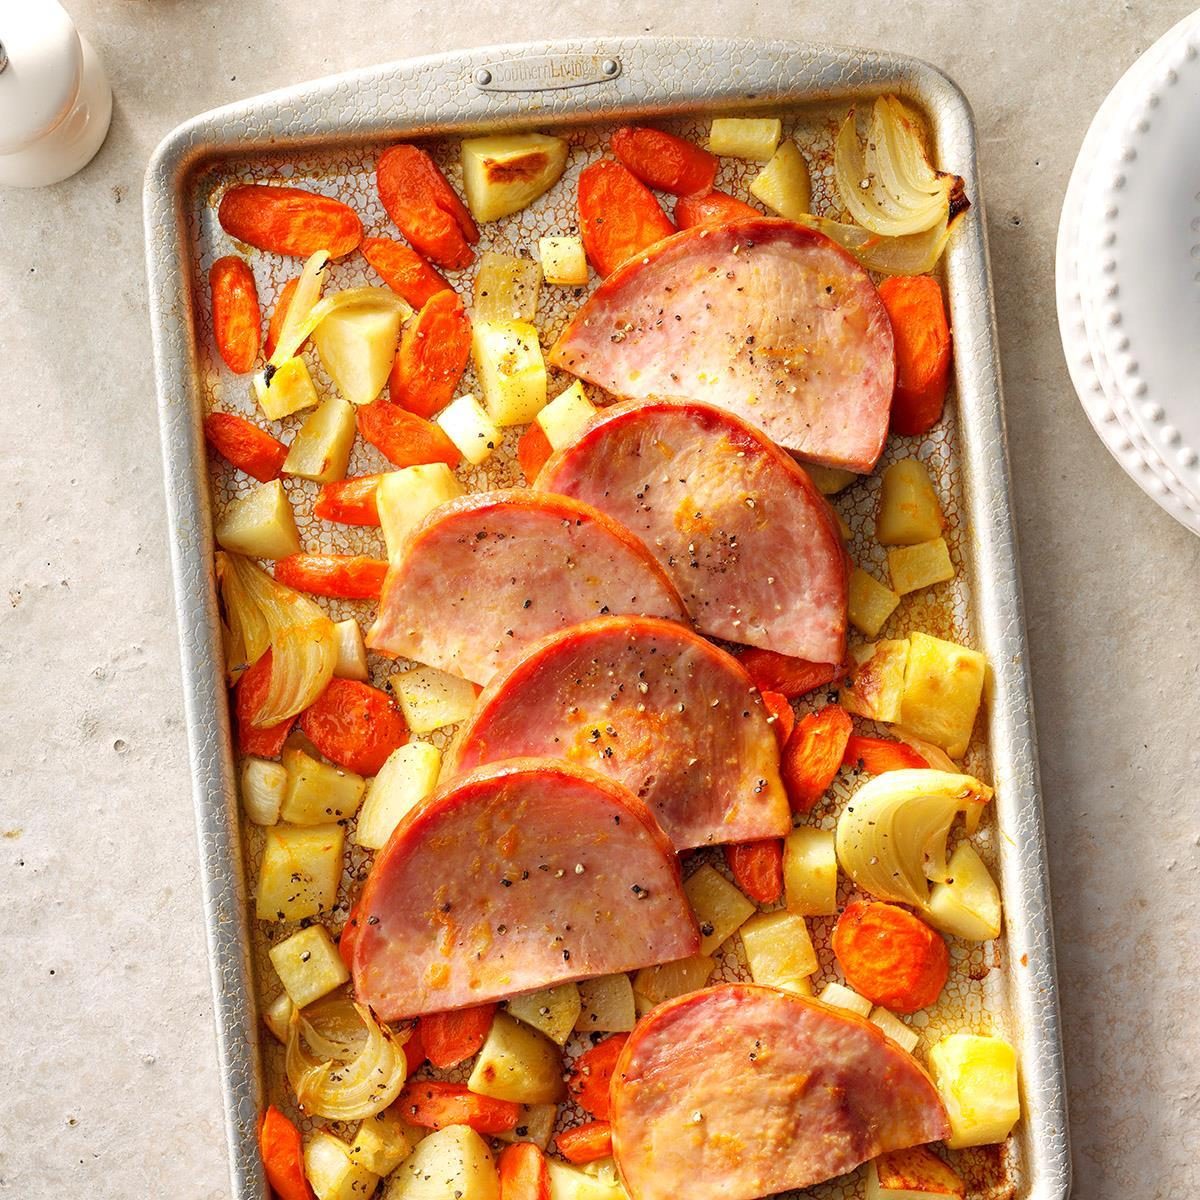 Sunday: Sliced Ham with Roasted Vegetables